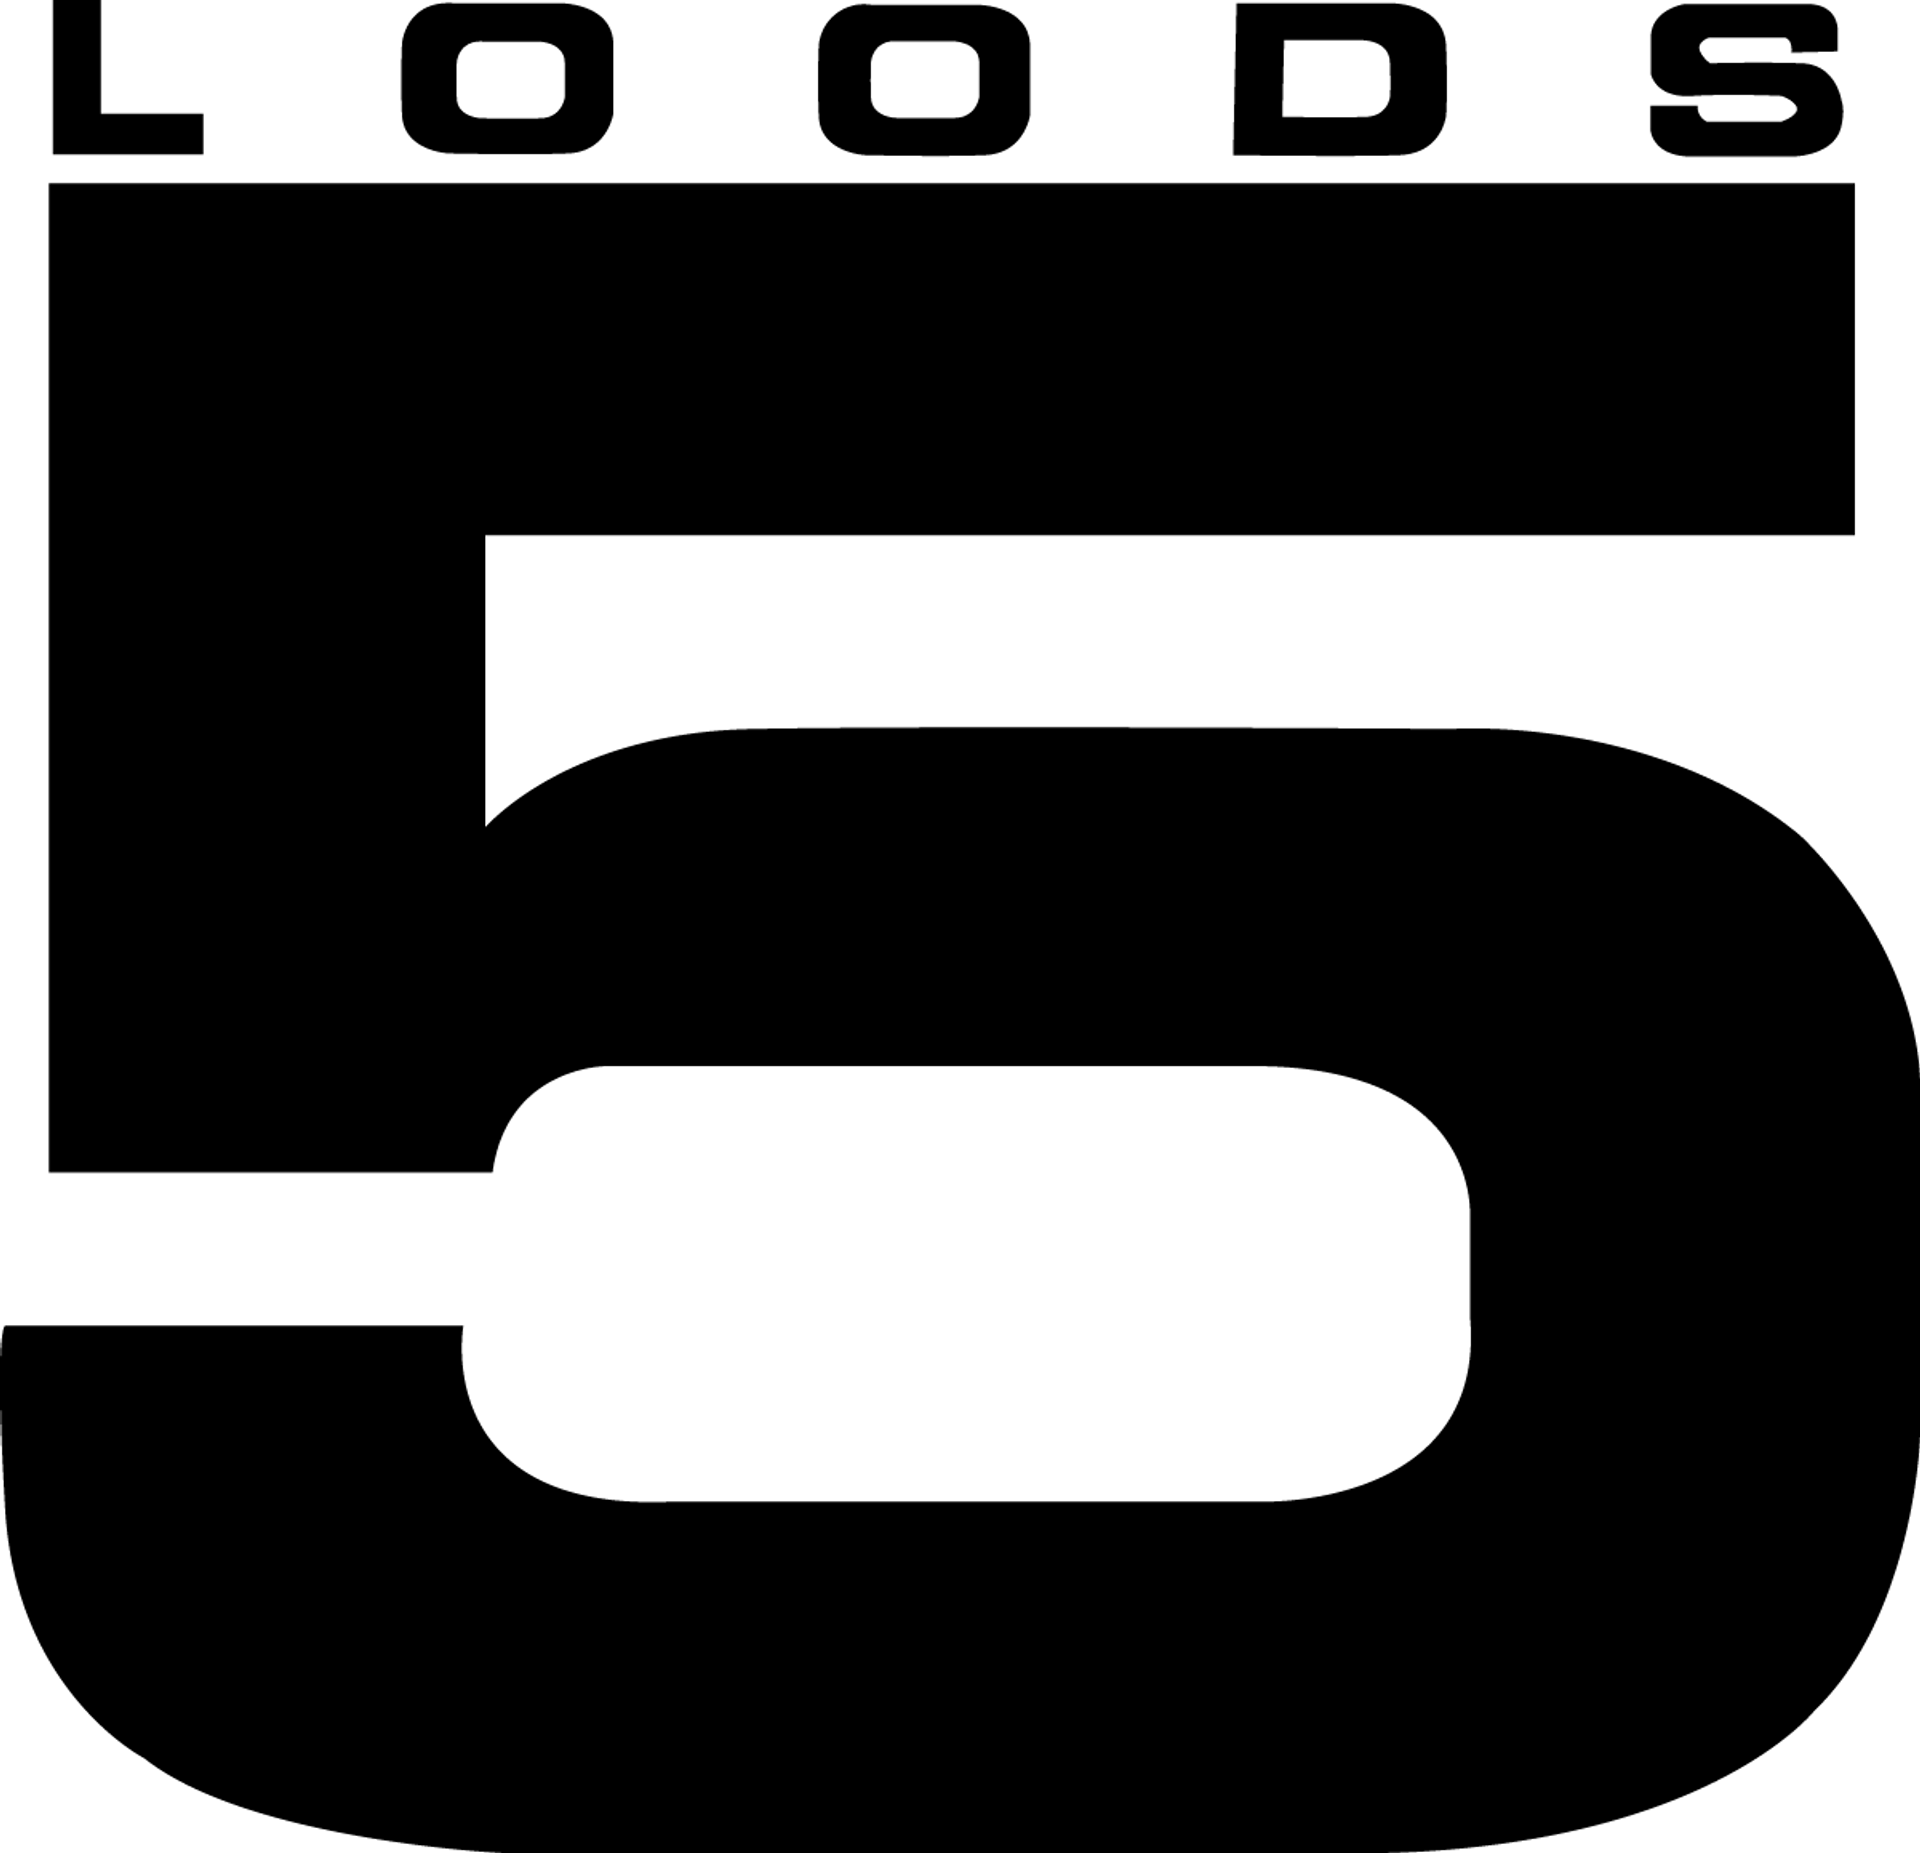 LOODS 5 logo